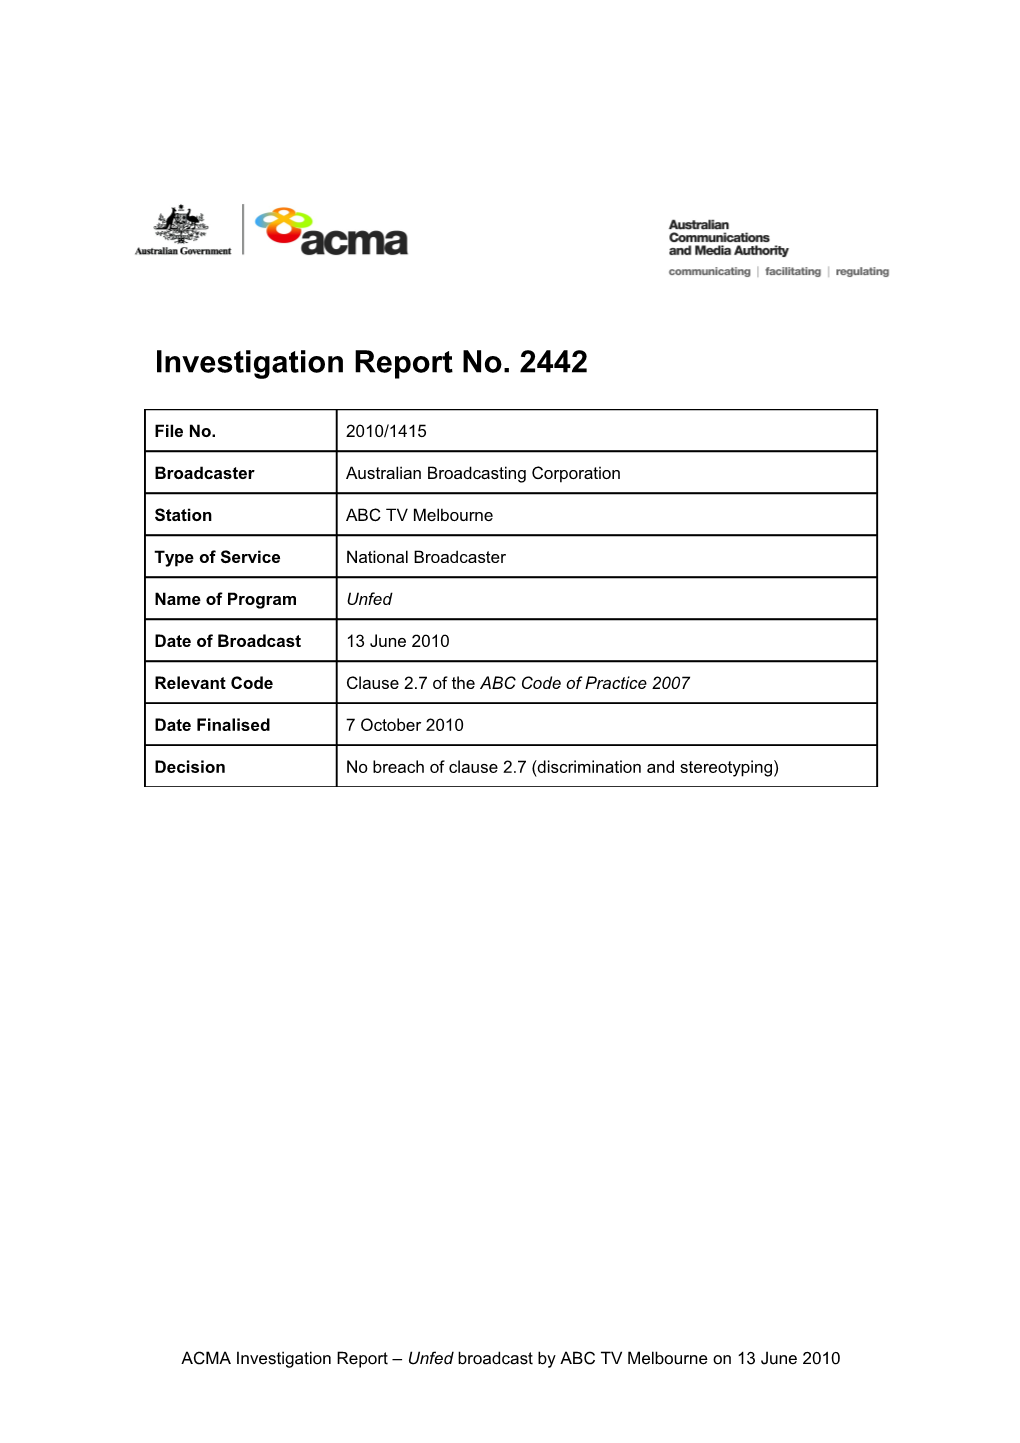 ABC TV Melb - ACMA Investigation Report 2442